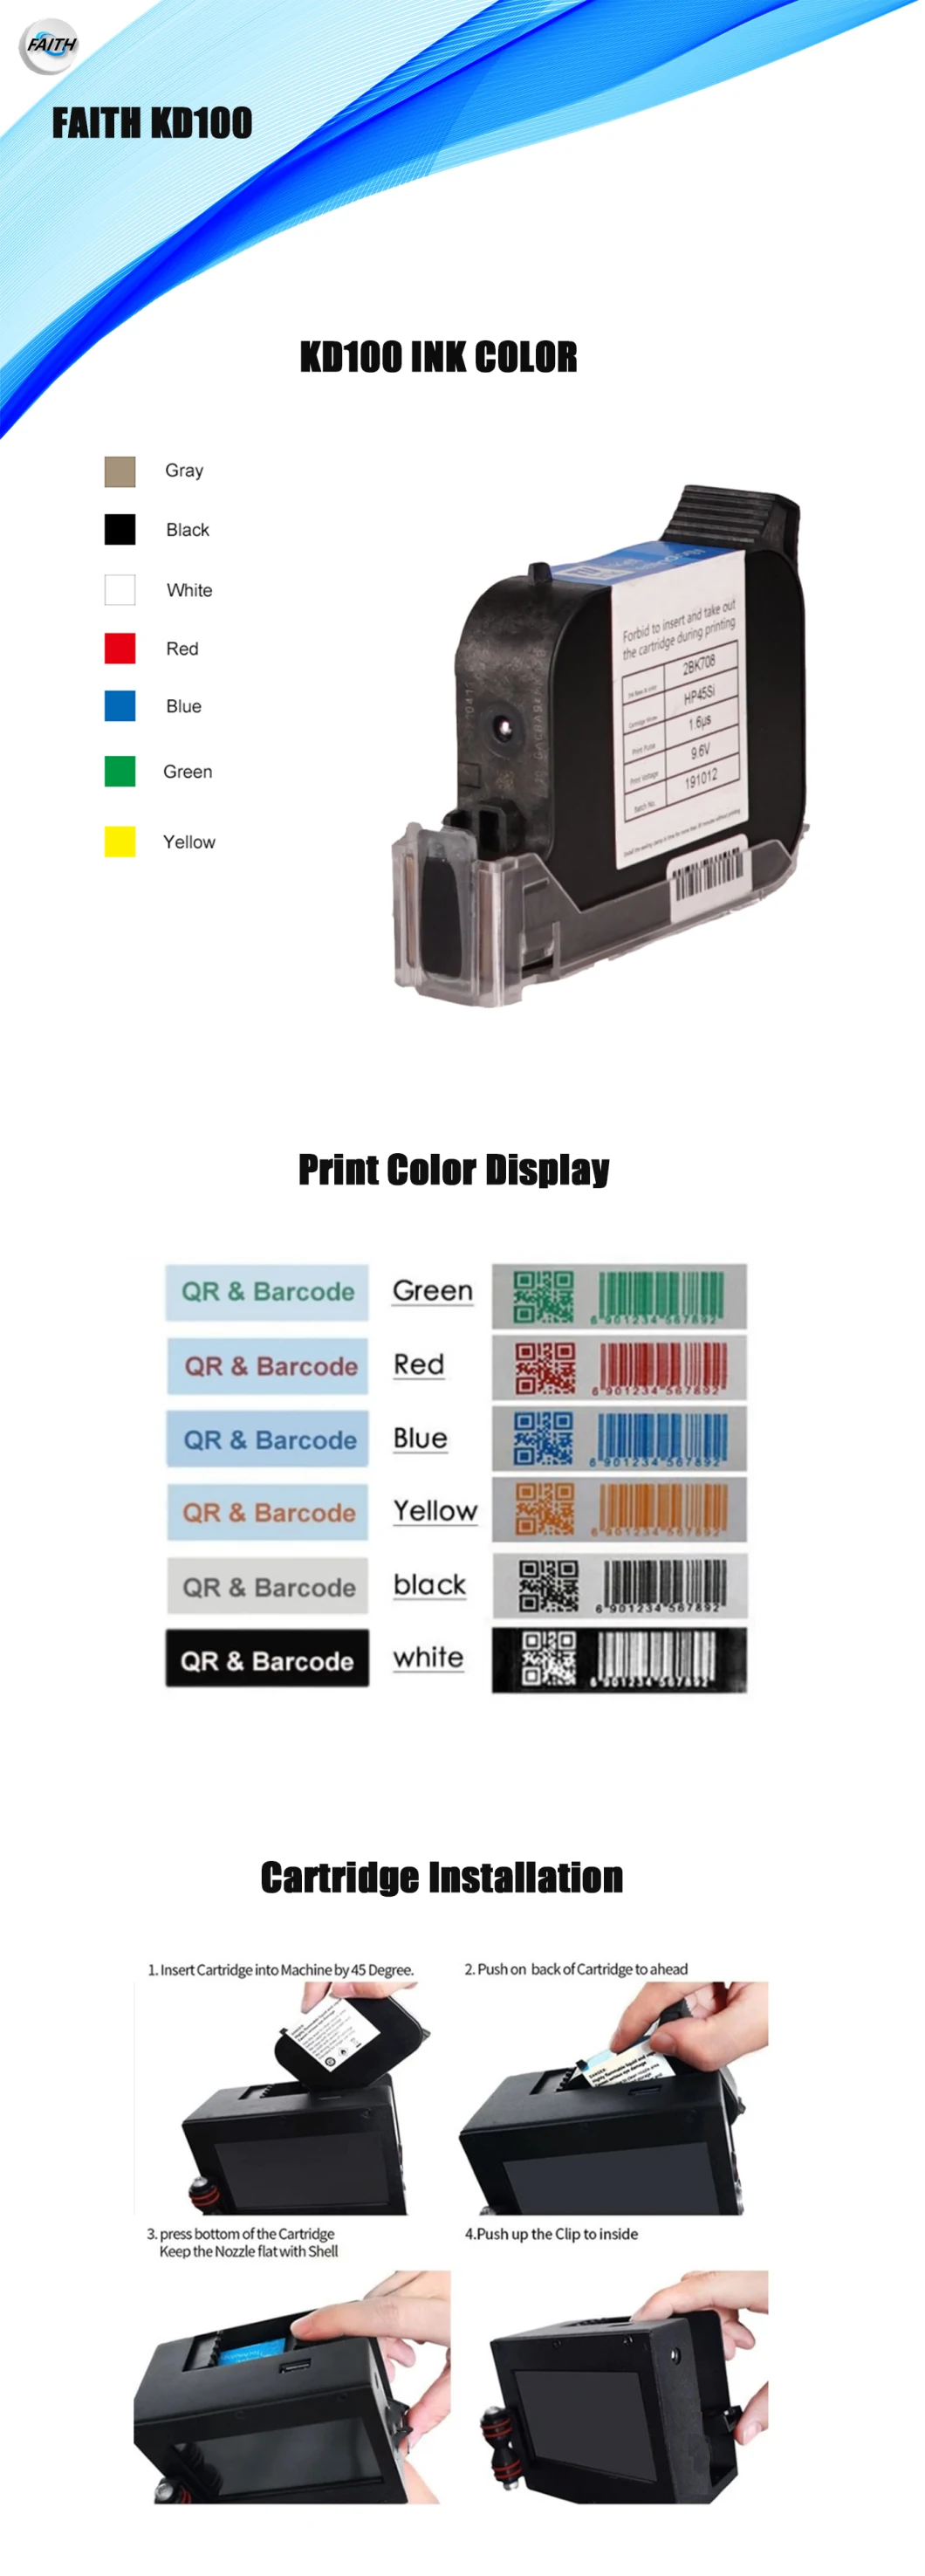 Handheld Portable Printer Date Codes Inkjet Printer for Egg Colour Tij Printer Ink Price